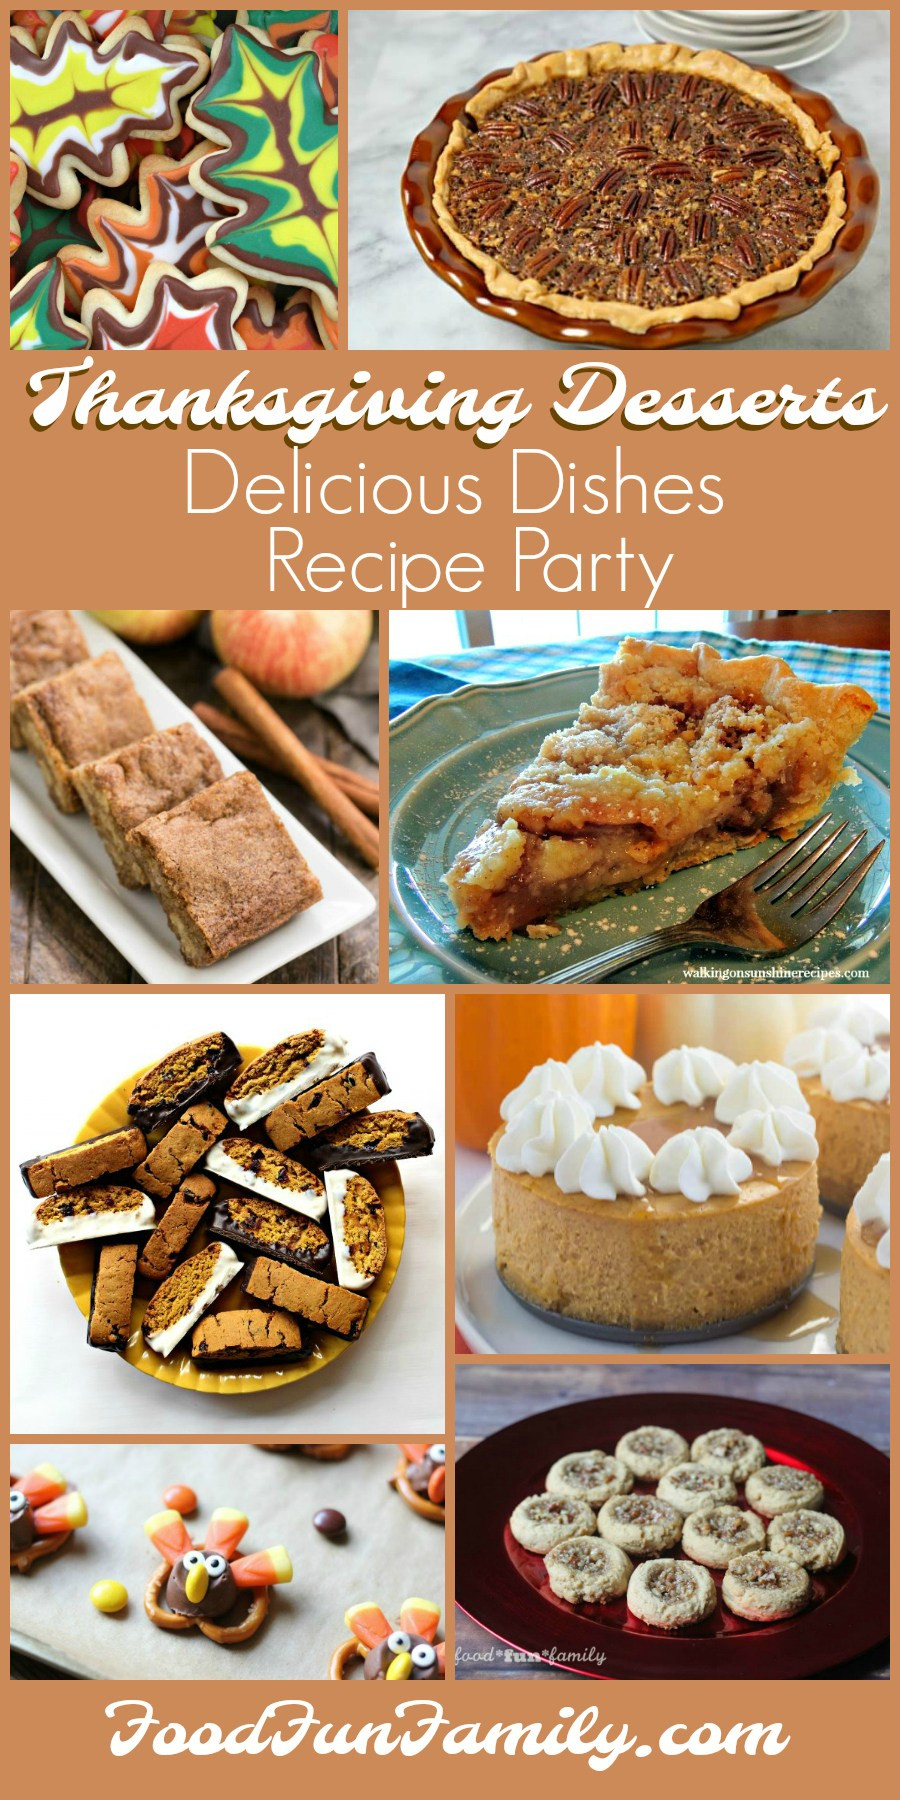 Delicious Thanksgiving Desserts
 Thanksgiving Dessert Recipes – Delicious Dishes Recipe